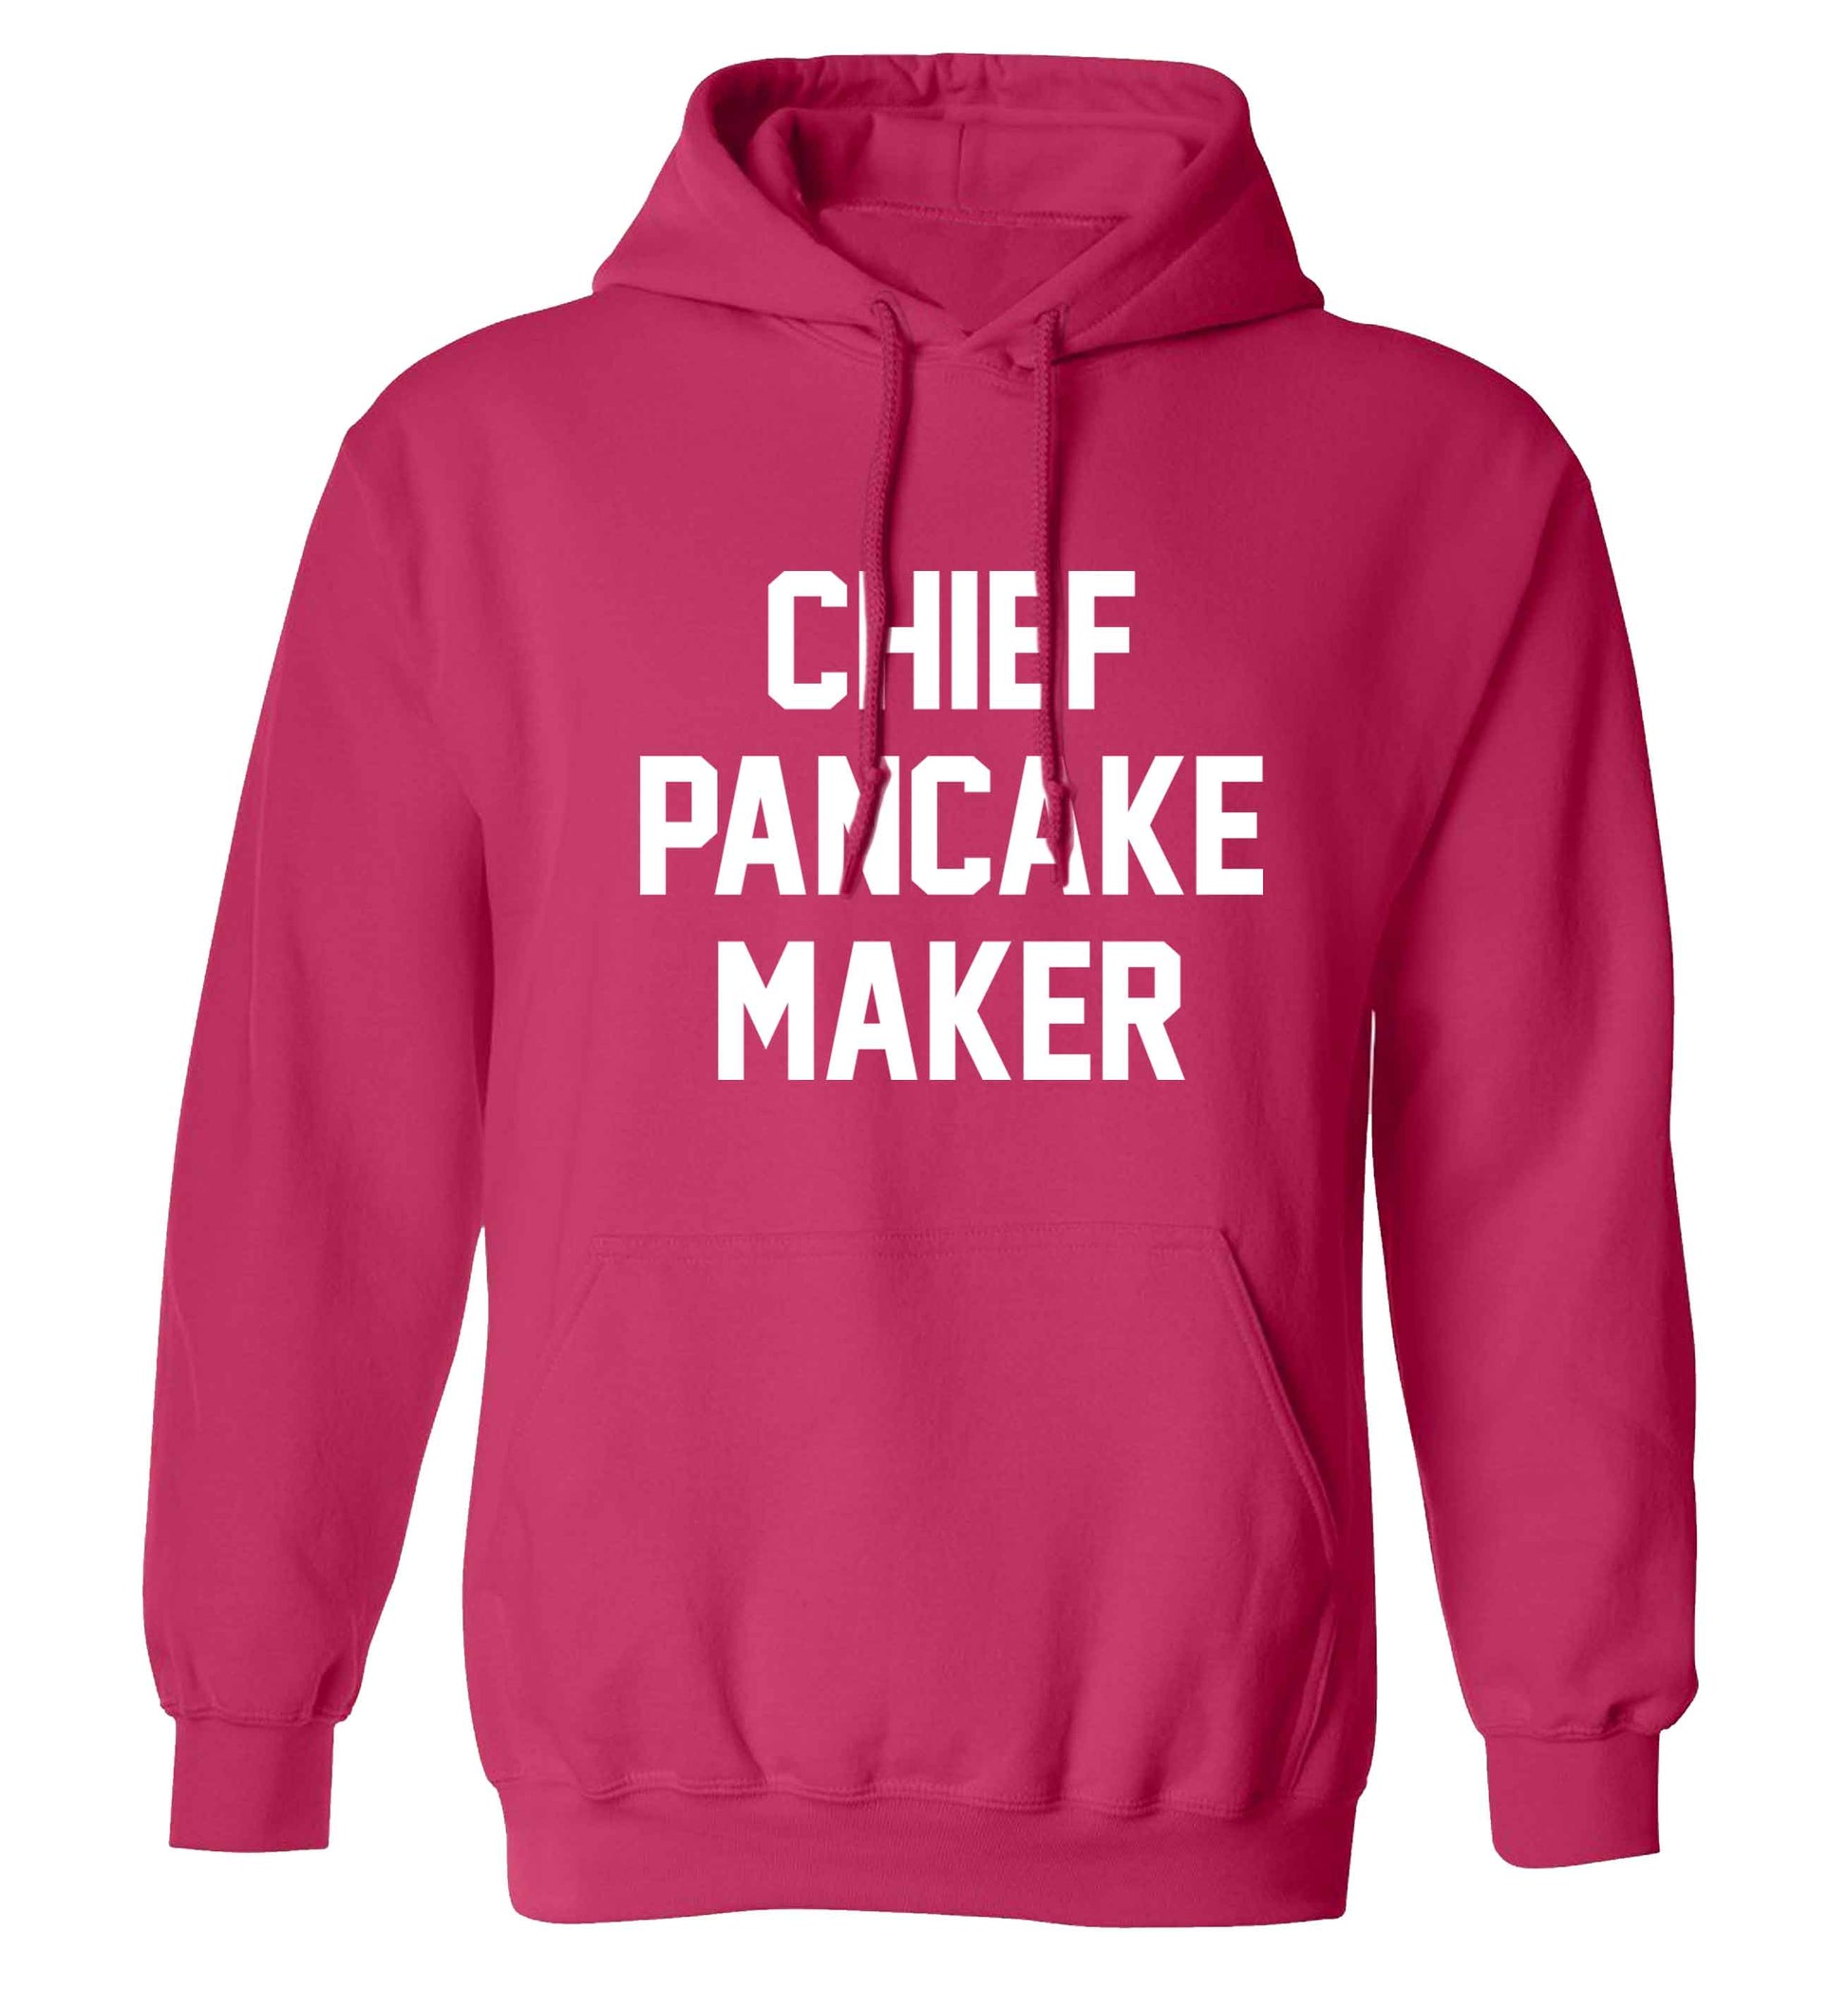 Chief pancake maker adults unisex pink hoodie 2XL